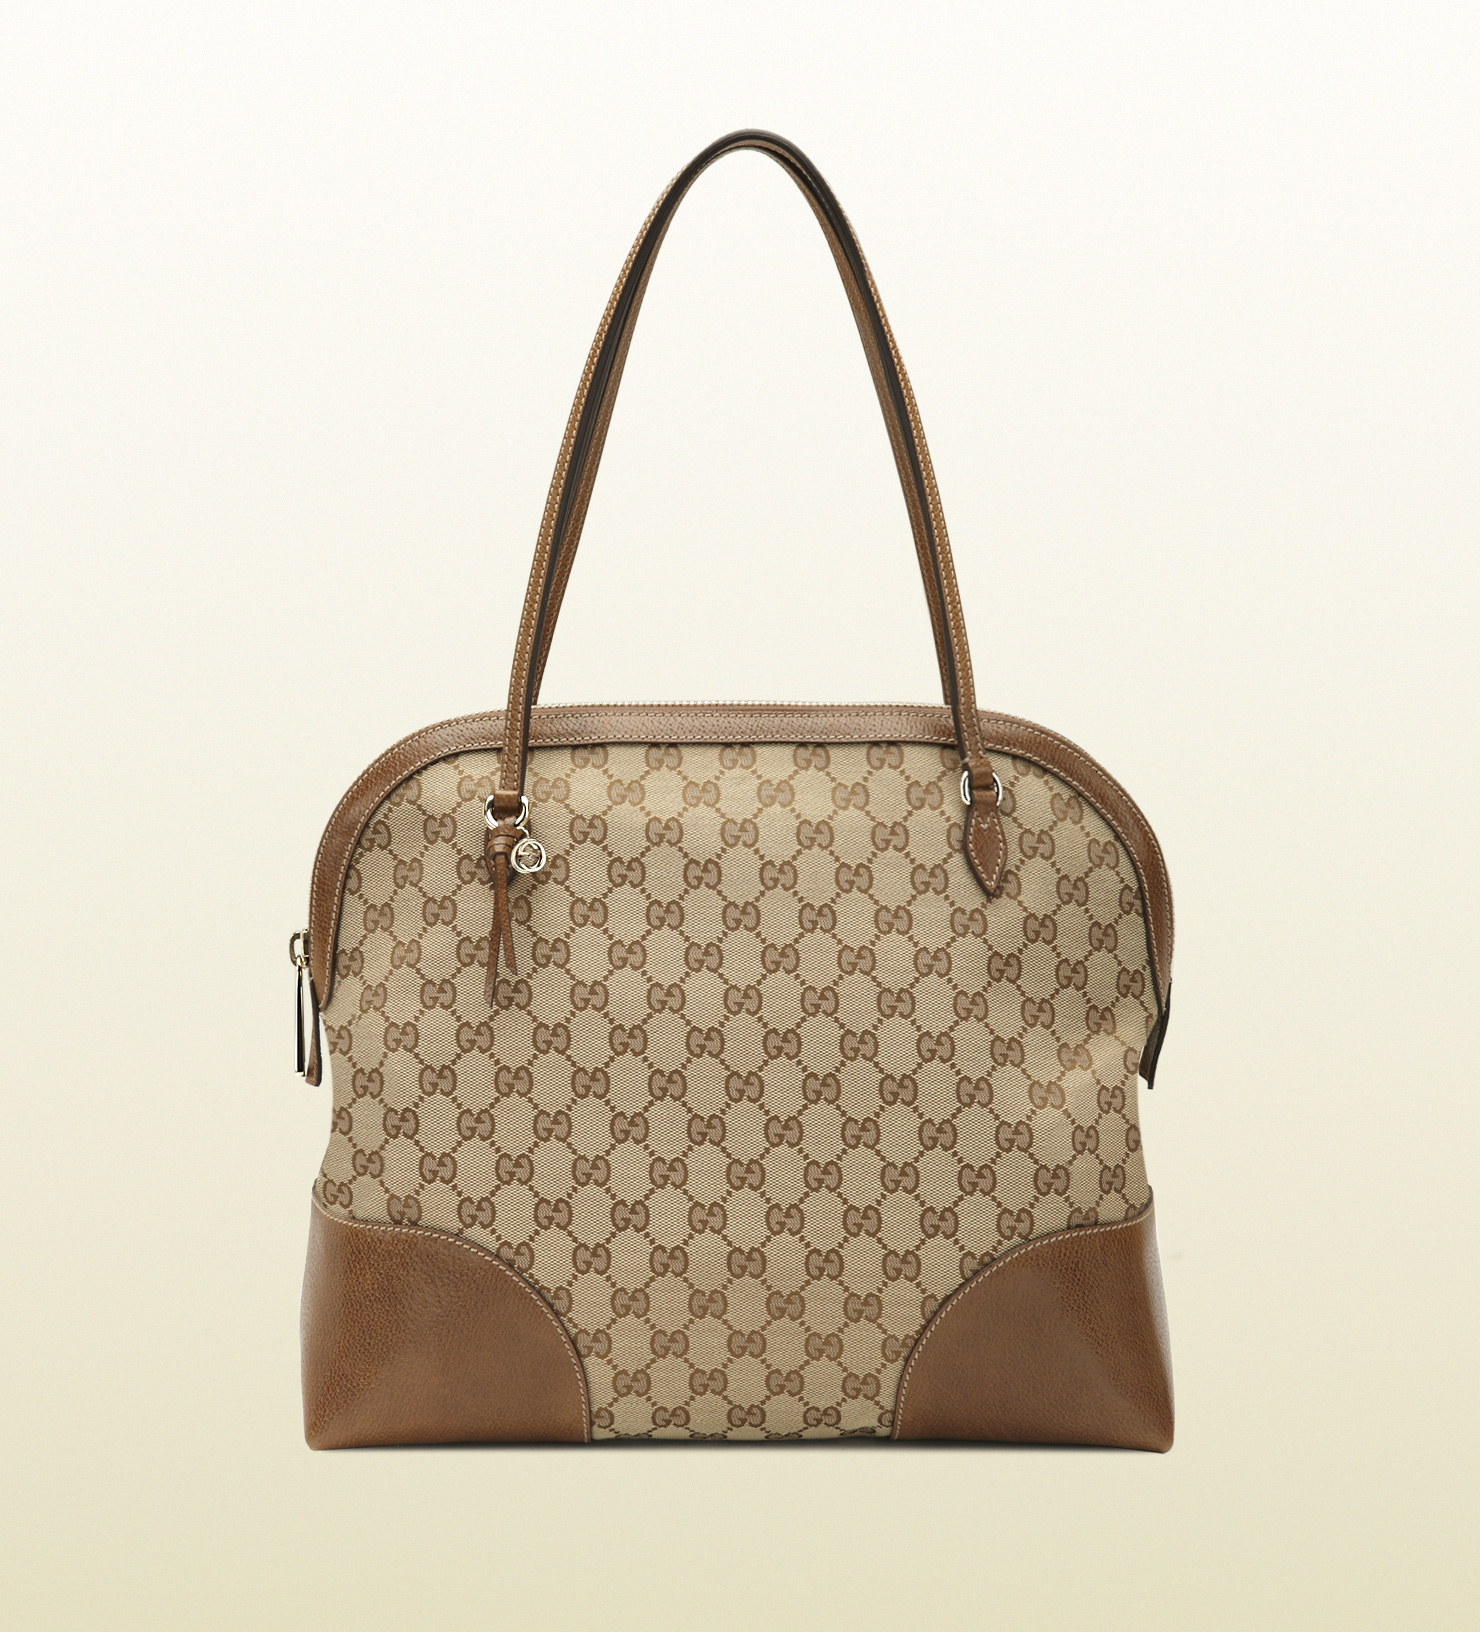 Gucci Bree Original Gg Canvas Shoulder Bag in Beige (Brown) - Lyst